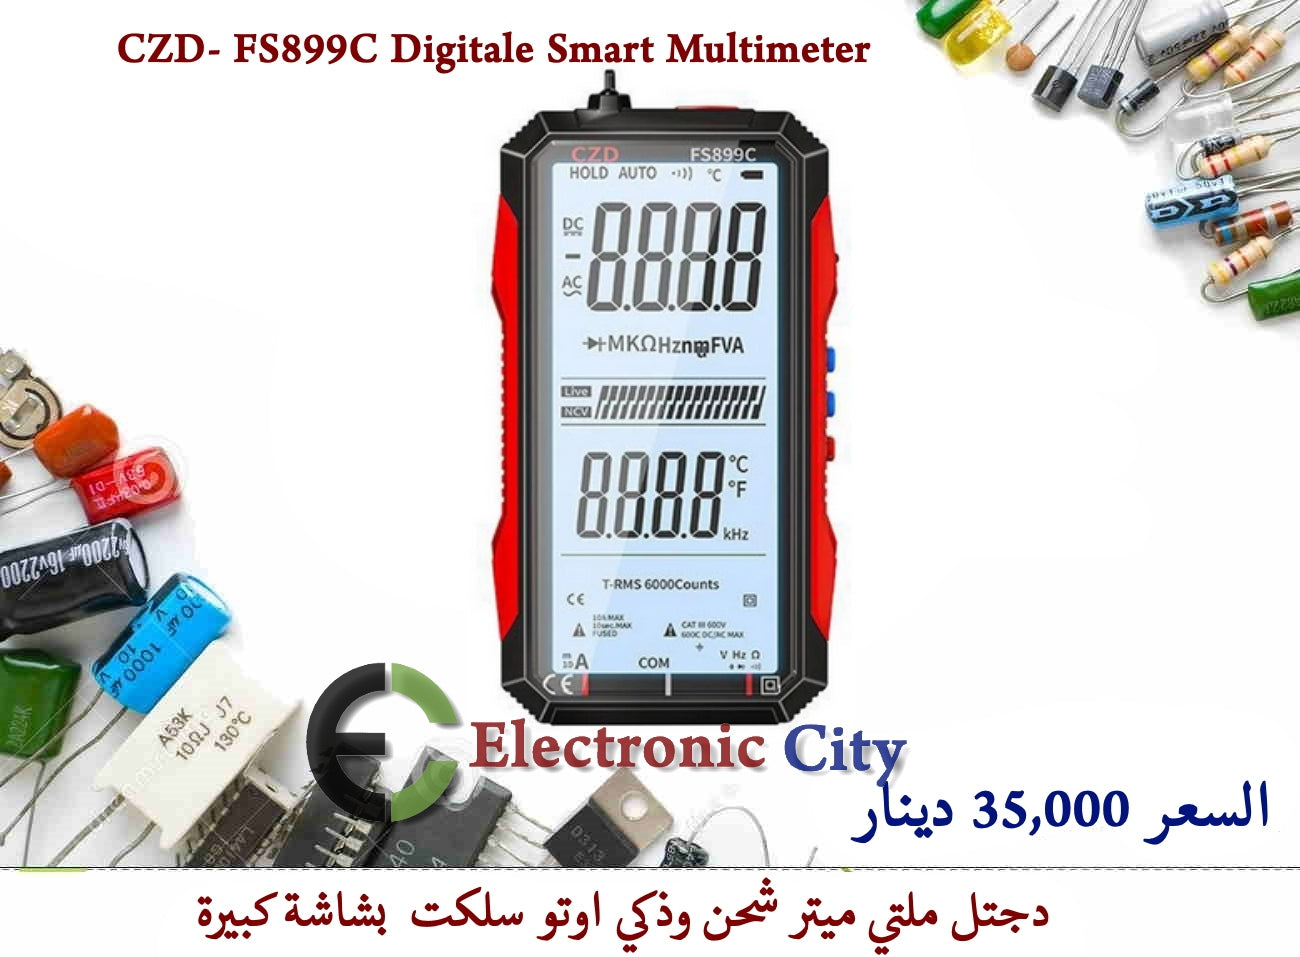 CZD- FS899C Digitale Smart Multimeter